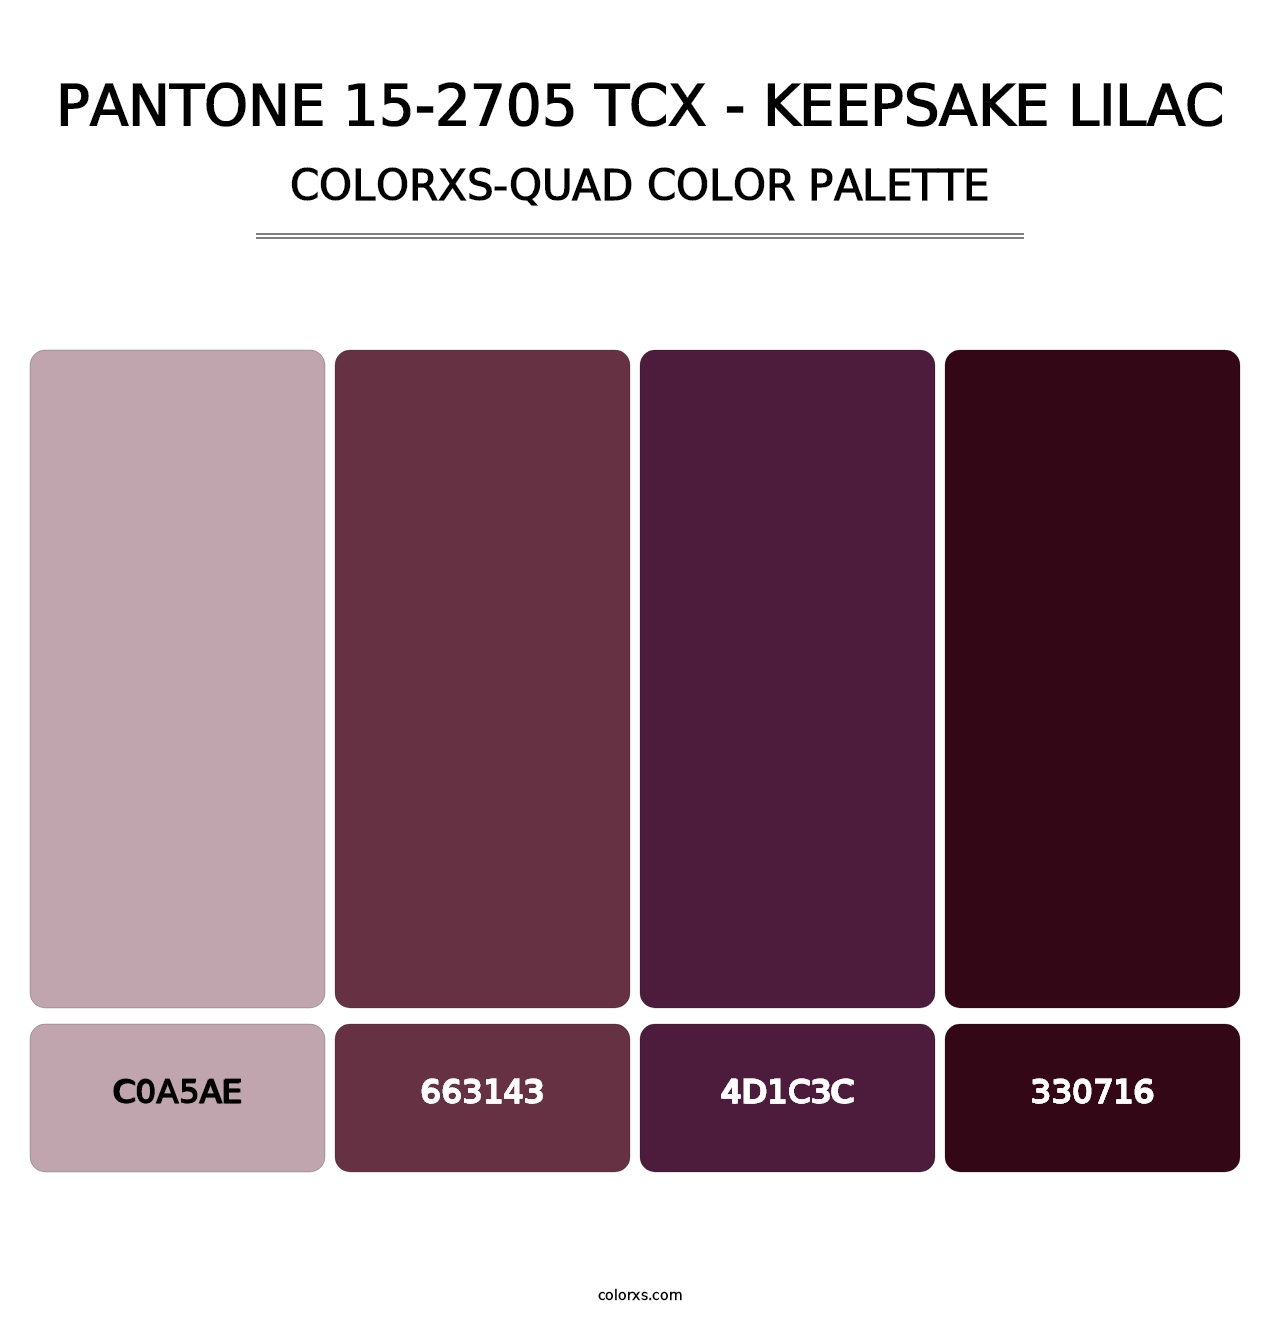 PANTONE 15-2705 TCX - Keepsake Lilac - Colorxs Quad Palette